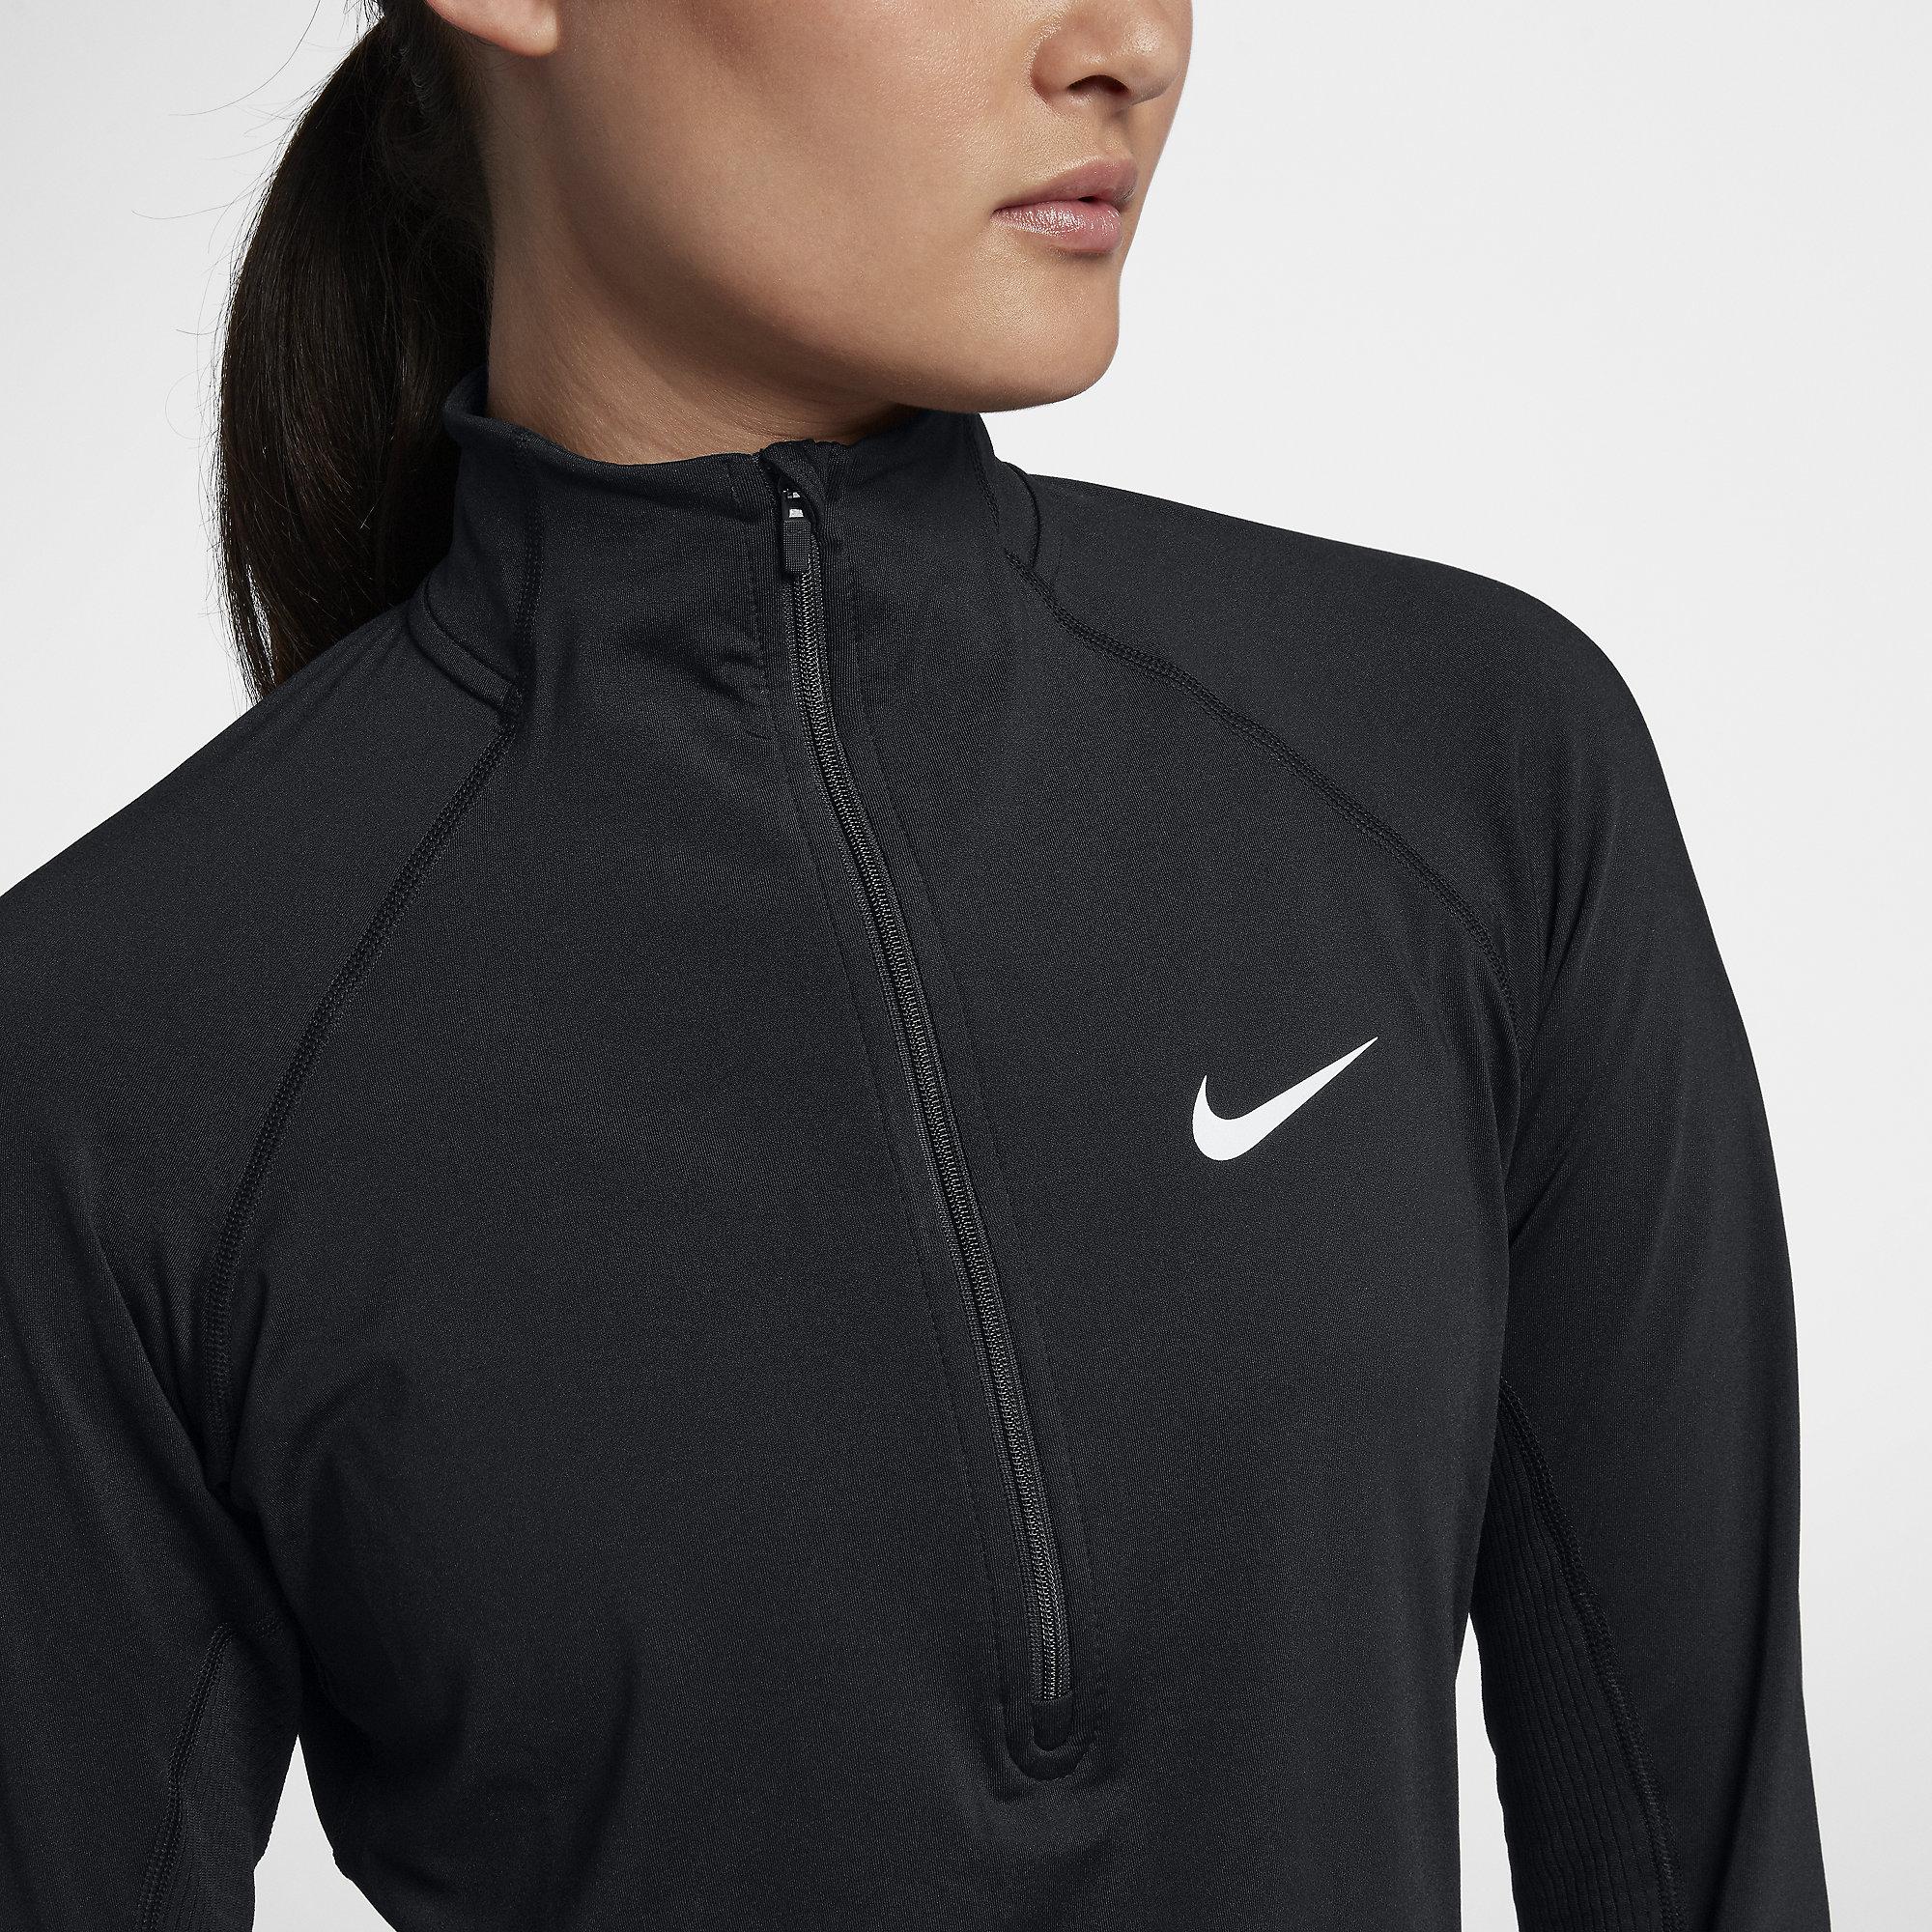 Nike Womens Pro Warm Top - Black/White - Tennisnuts.com